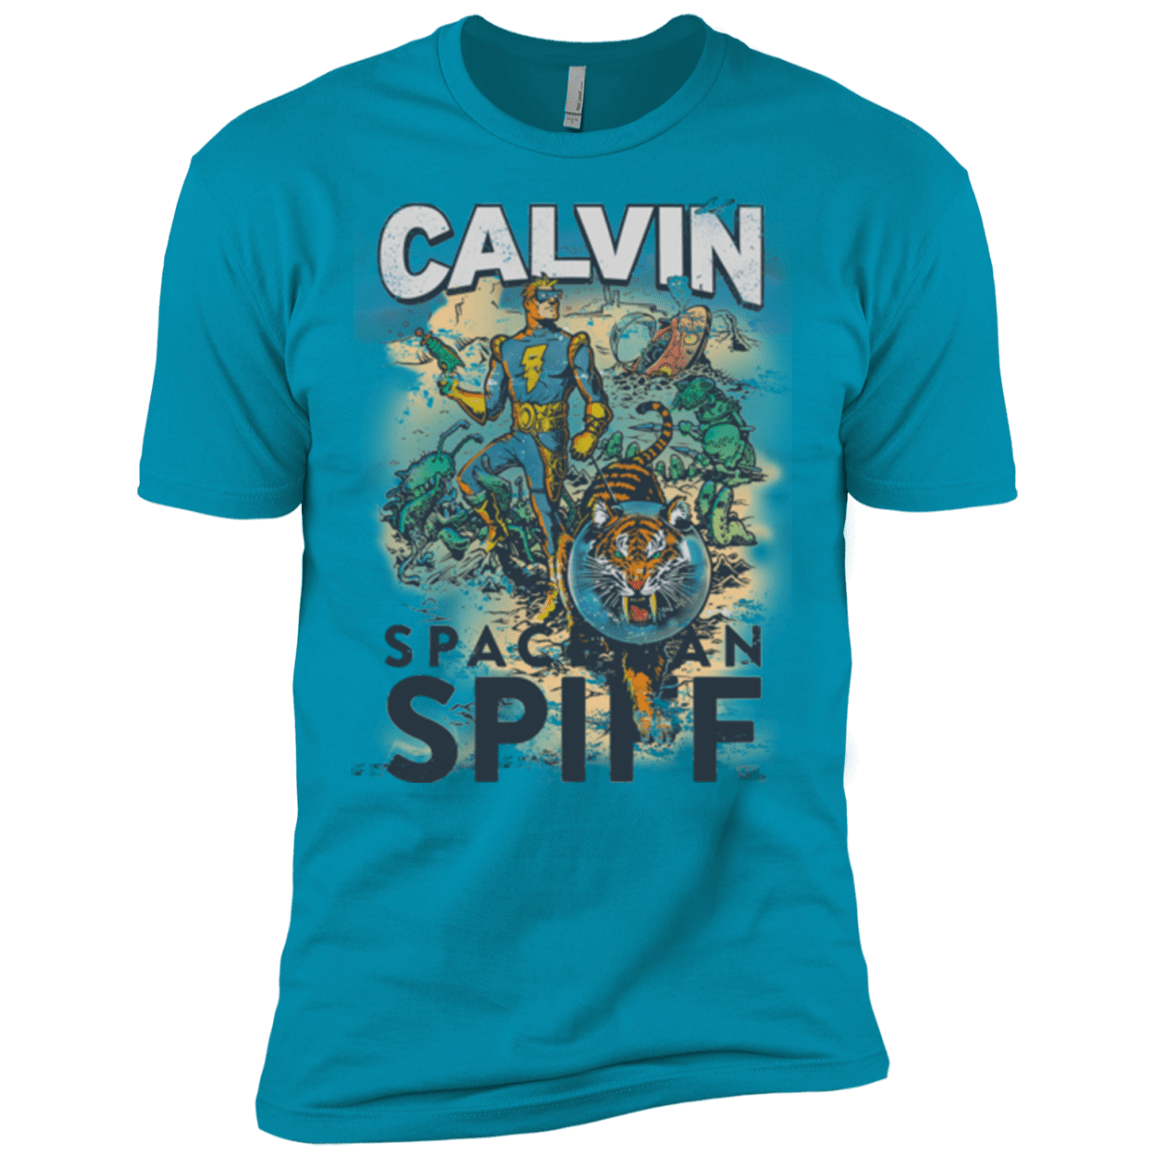 T-Shirts Turquoise / X-Small Spaceman Spiff Men's Premium T-Shirt